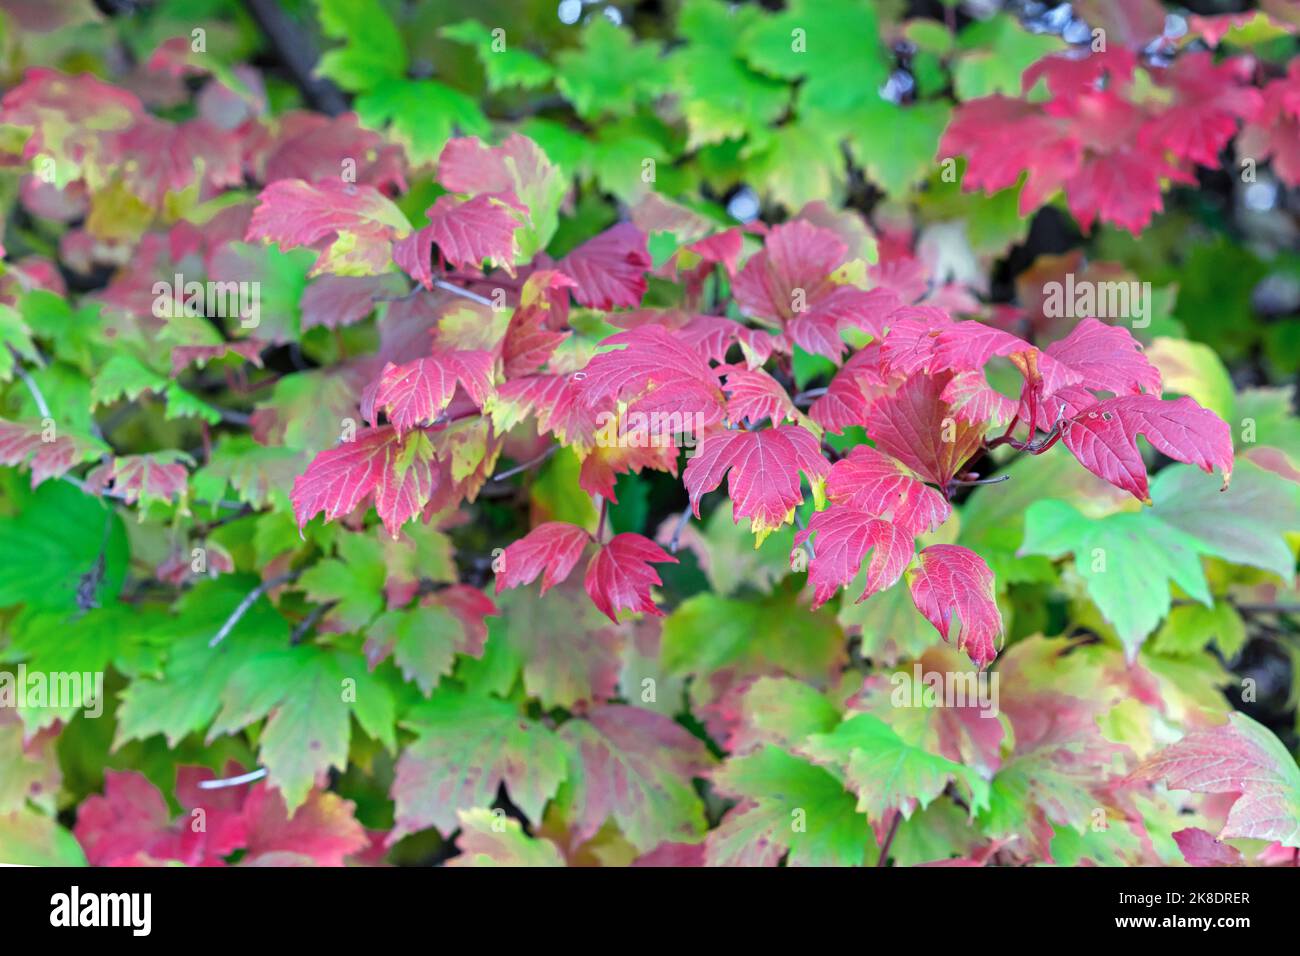 Purple leaves of viburnum vulgaris in the autumn park. Colorful autumn foliage. Stock Photo